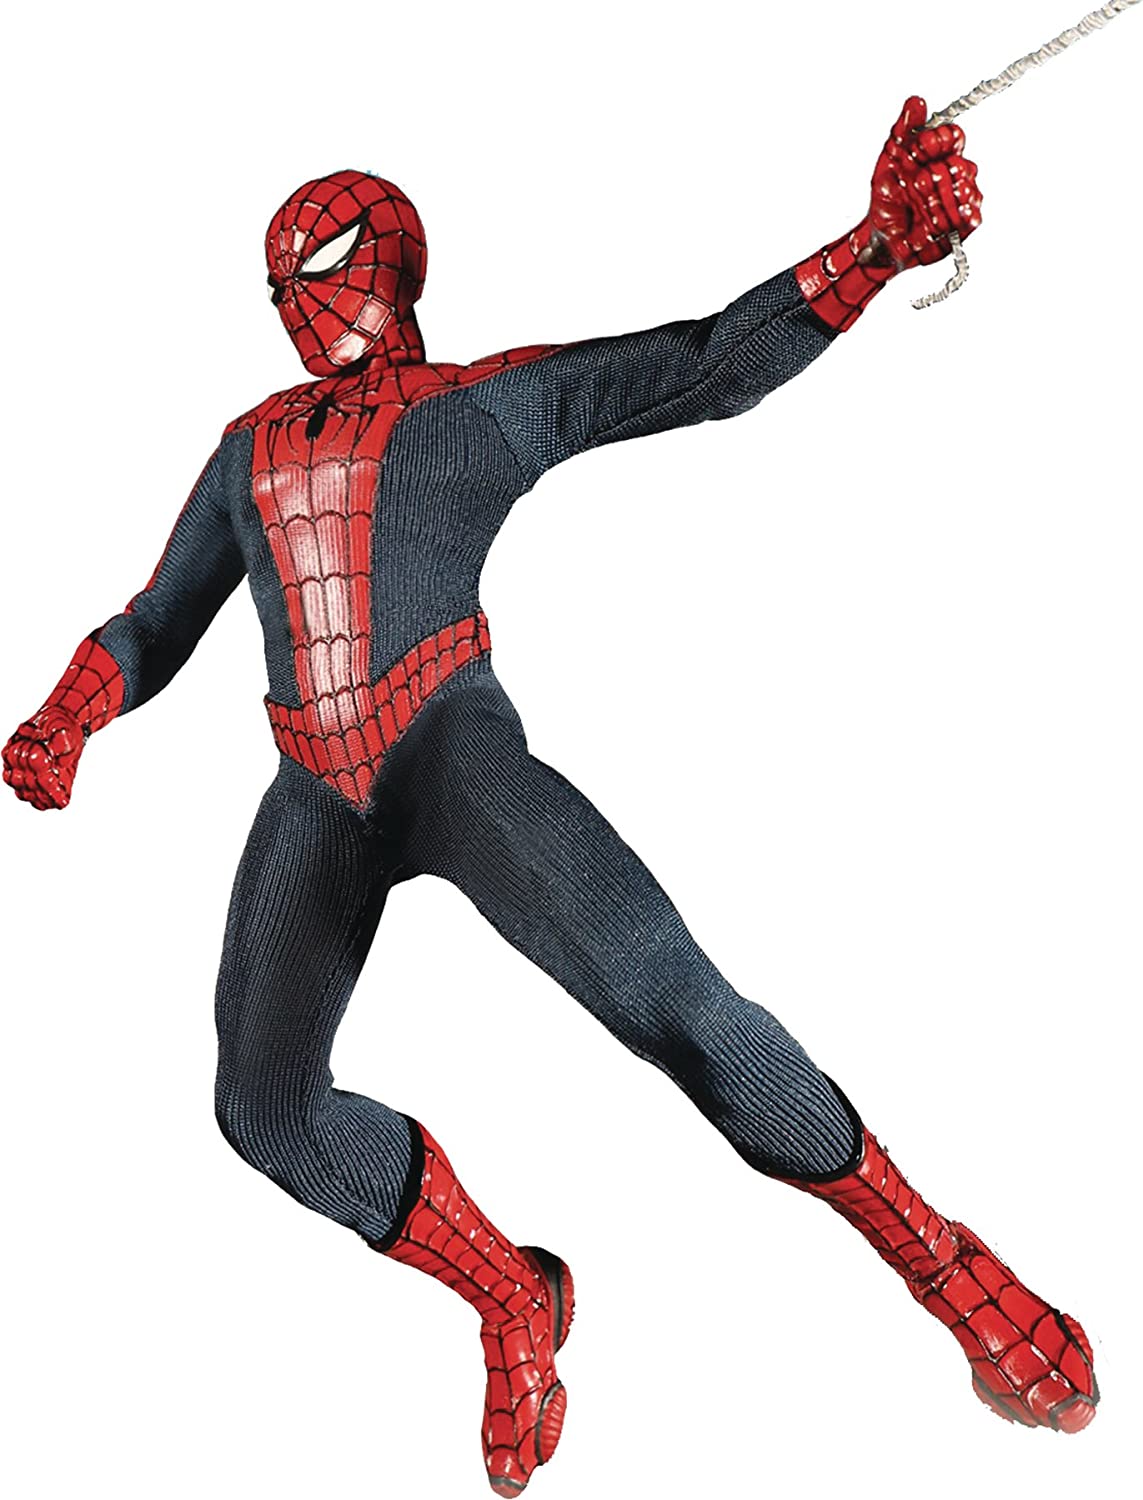 Mezco Toyz ONE:12 Collective: Spider-Man Spiderman Action Figure